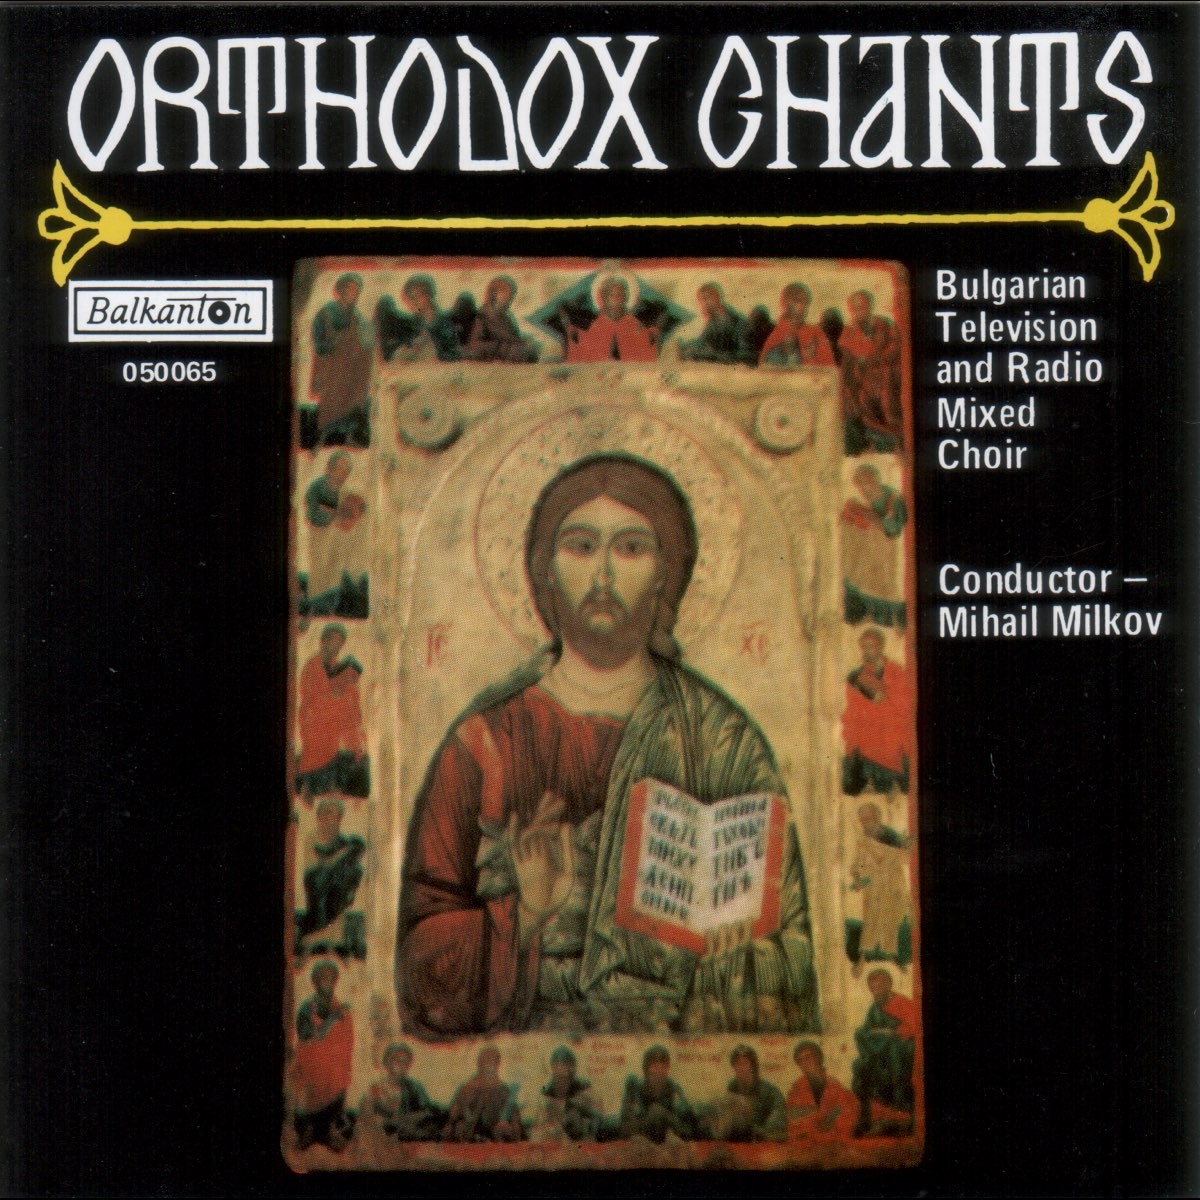 Bulgarian Television and Radio Mixed Choir, cond. Mihail Milkov. Orthodox Chants